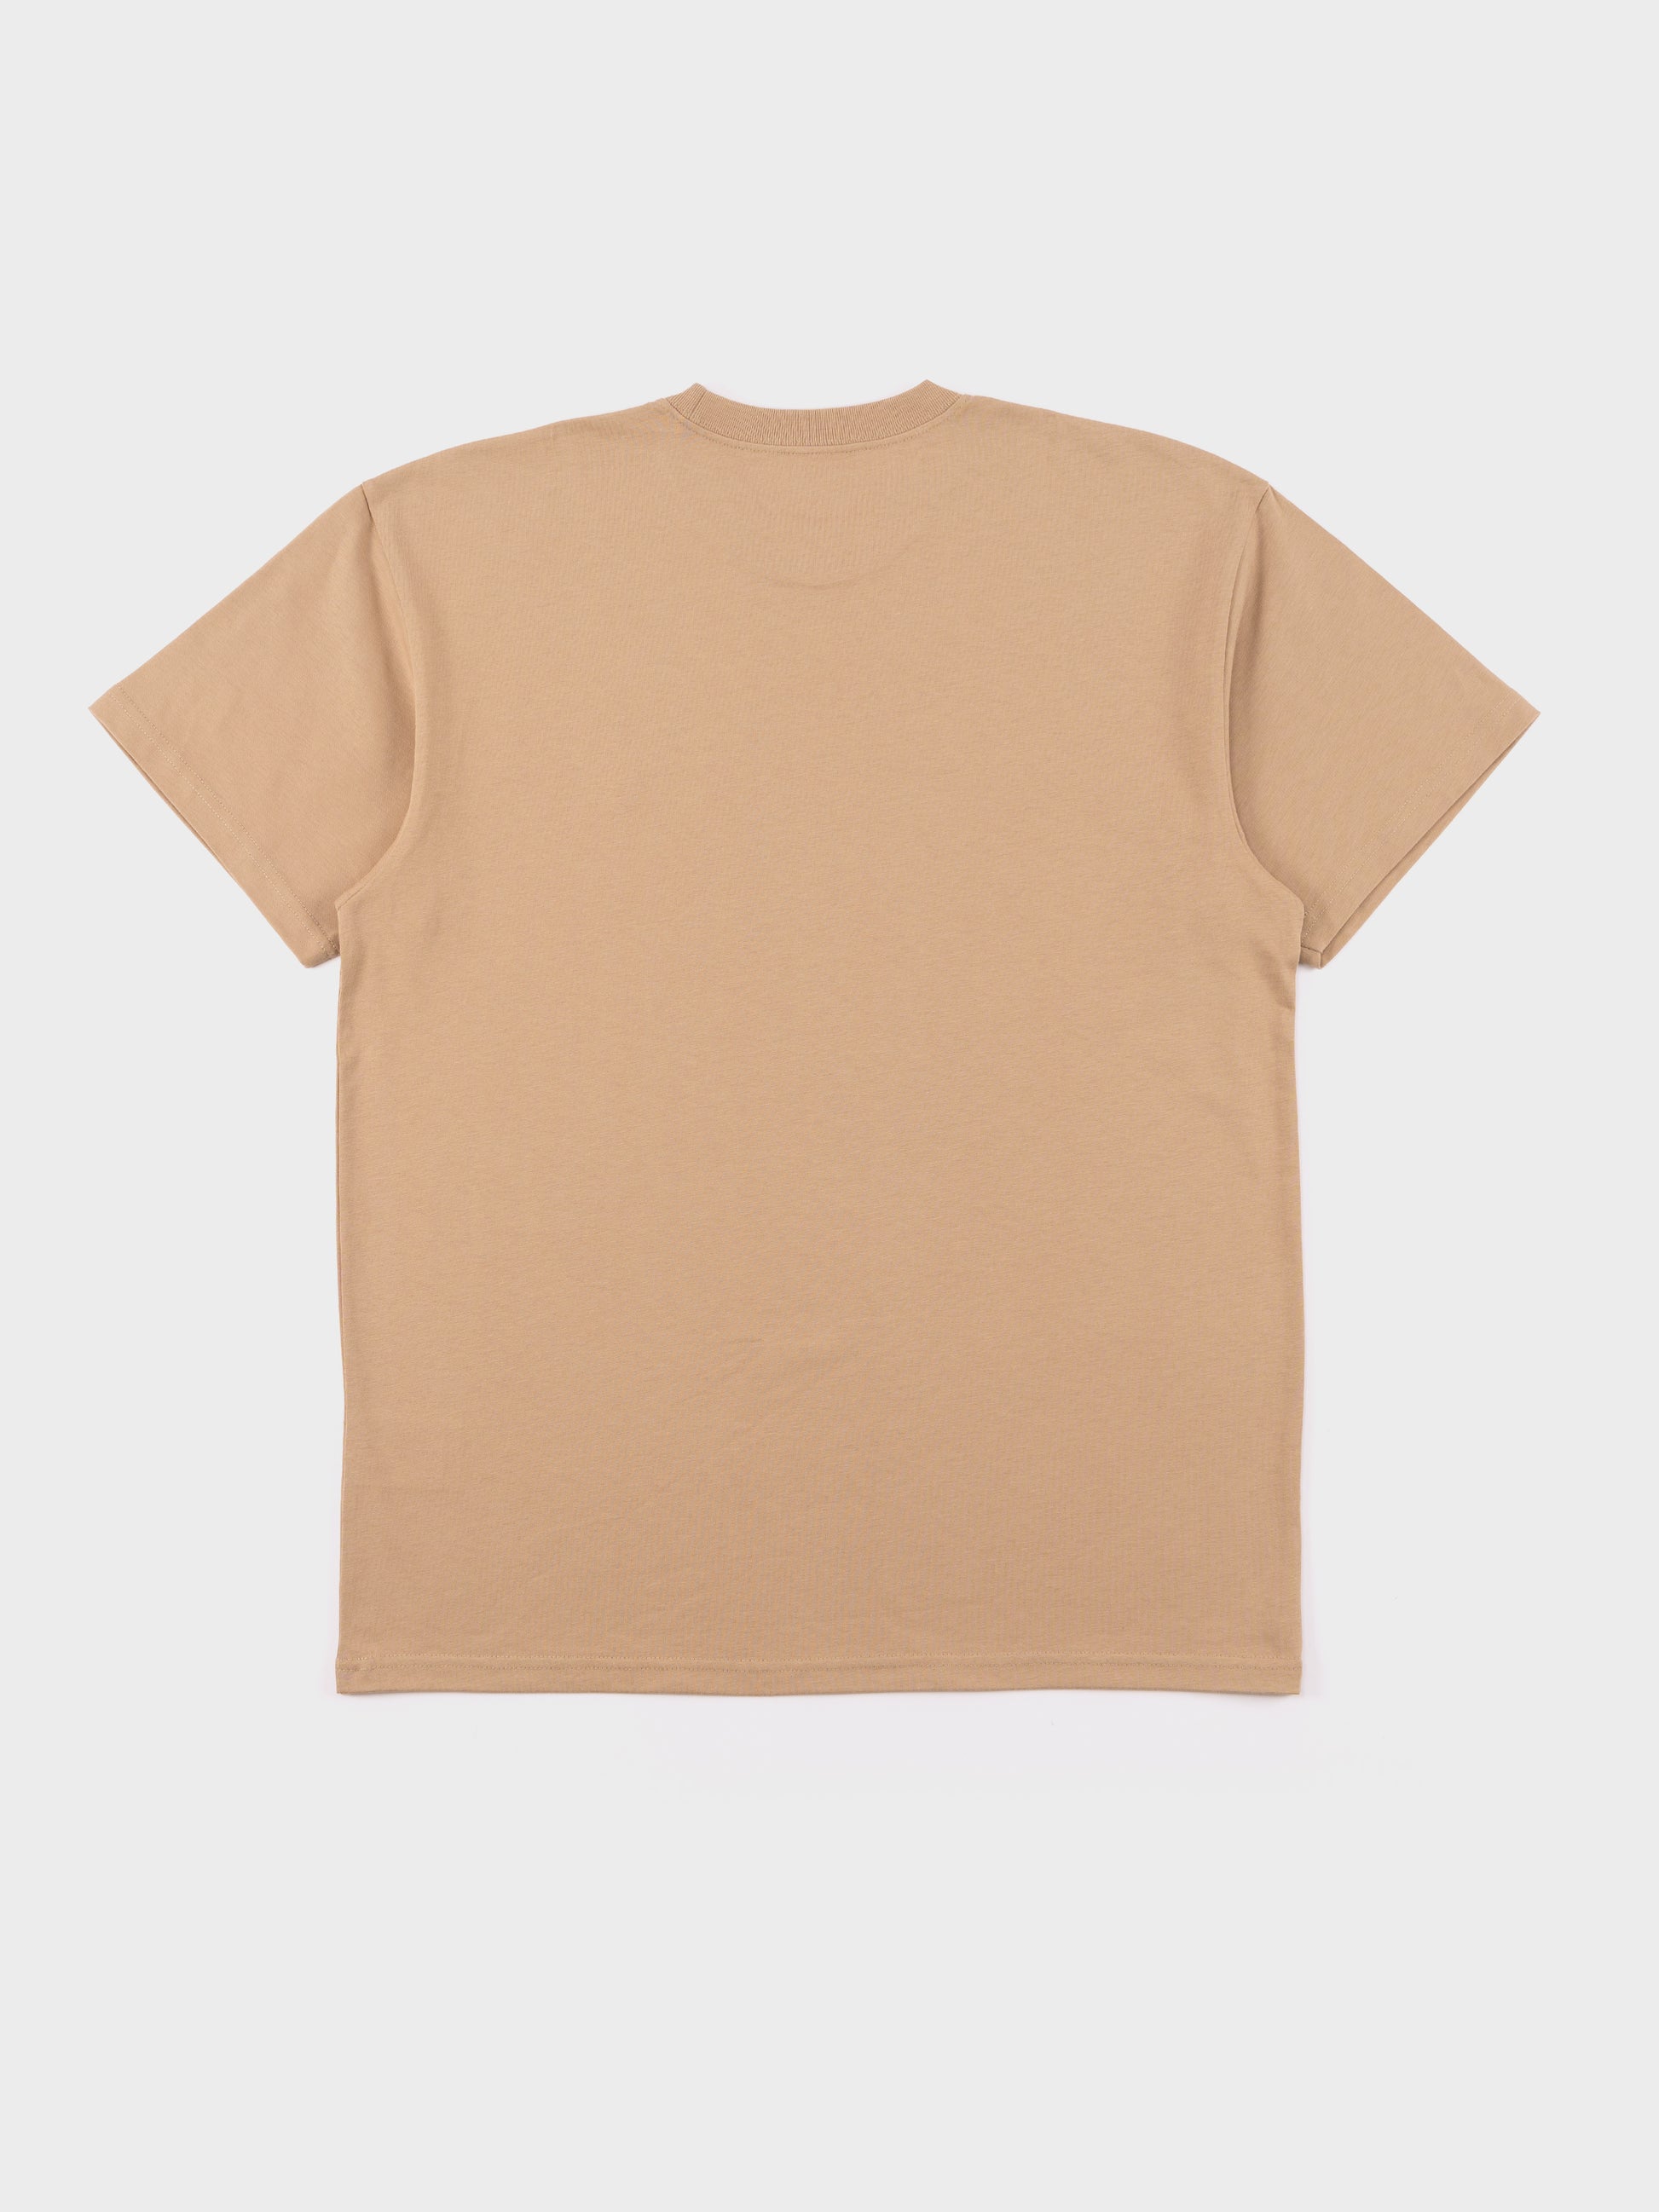 Carhartt SS Chase T Shirt - Sable/Gold